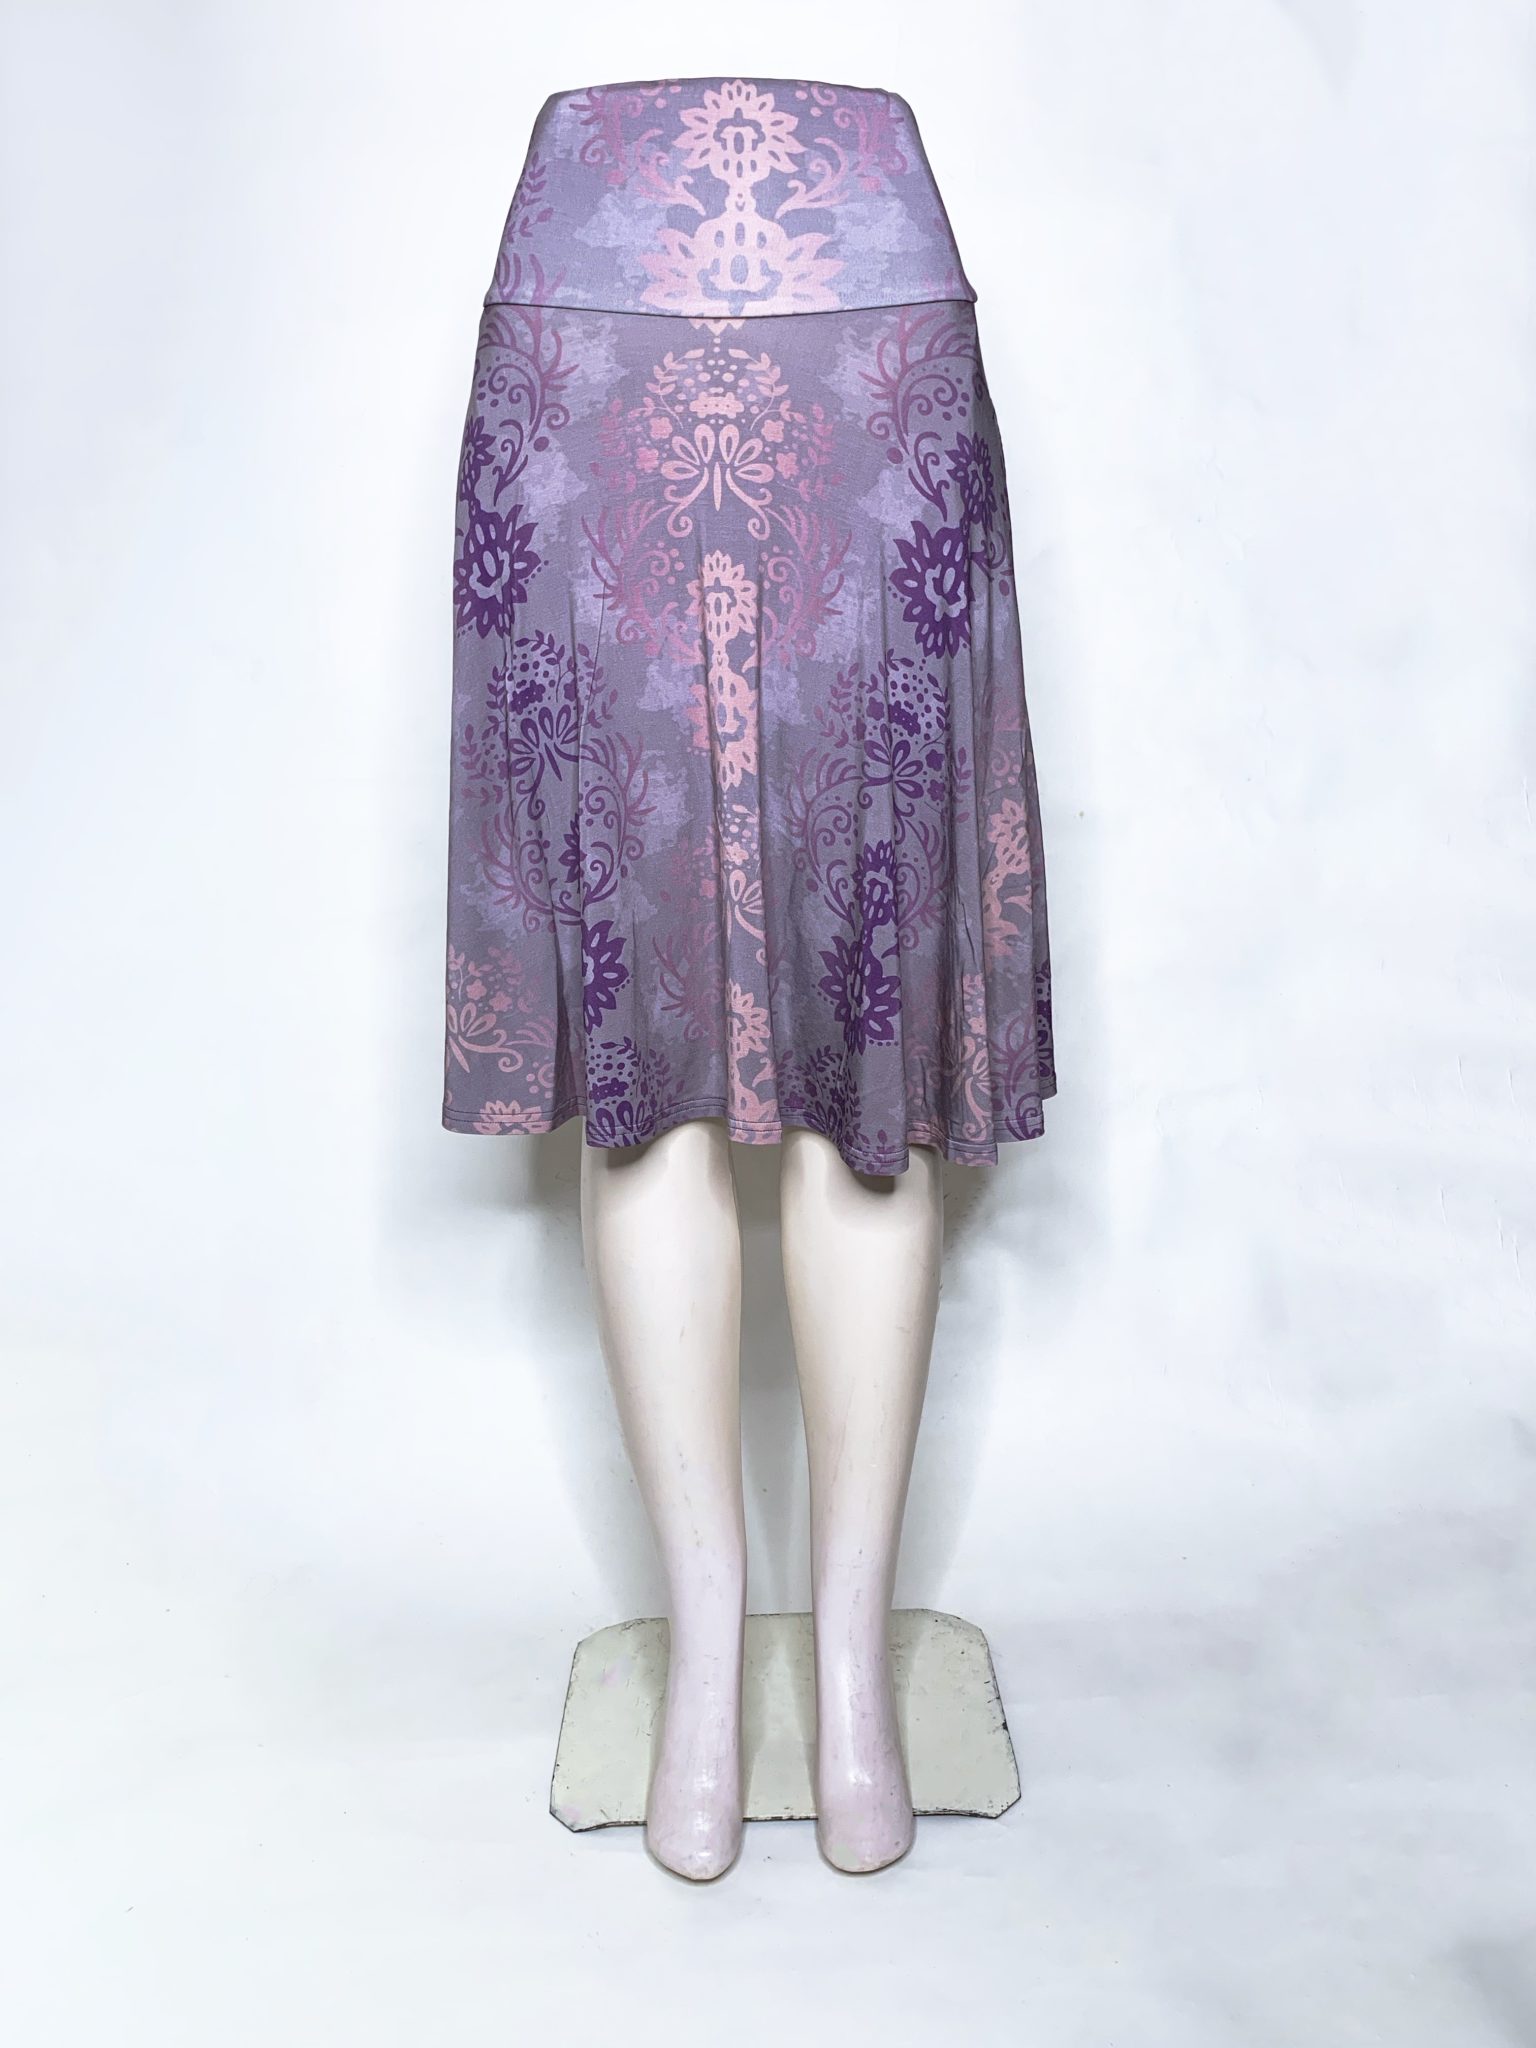 Bambooty Damask Classic Skirt - Bambooty Bodygear